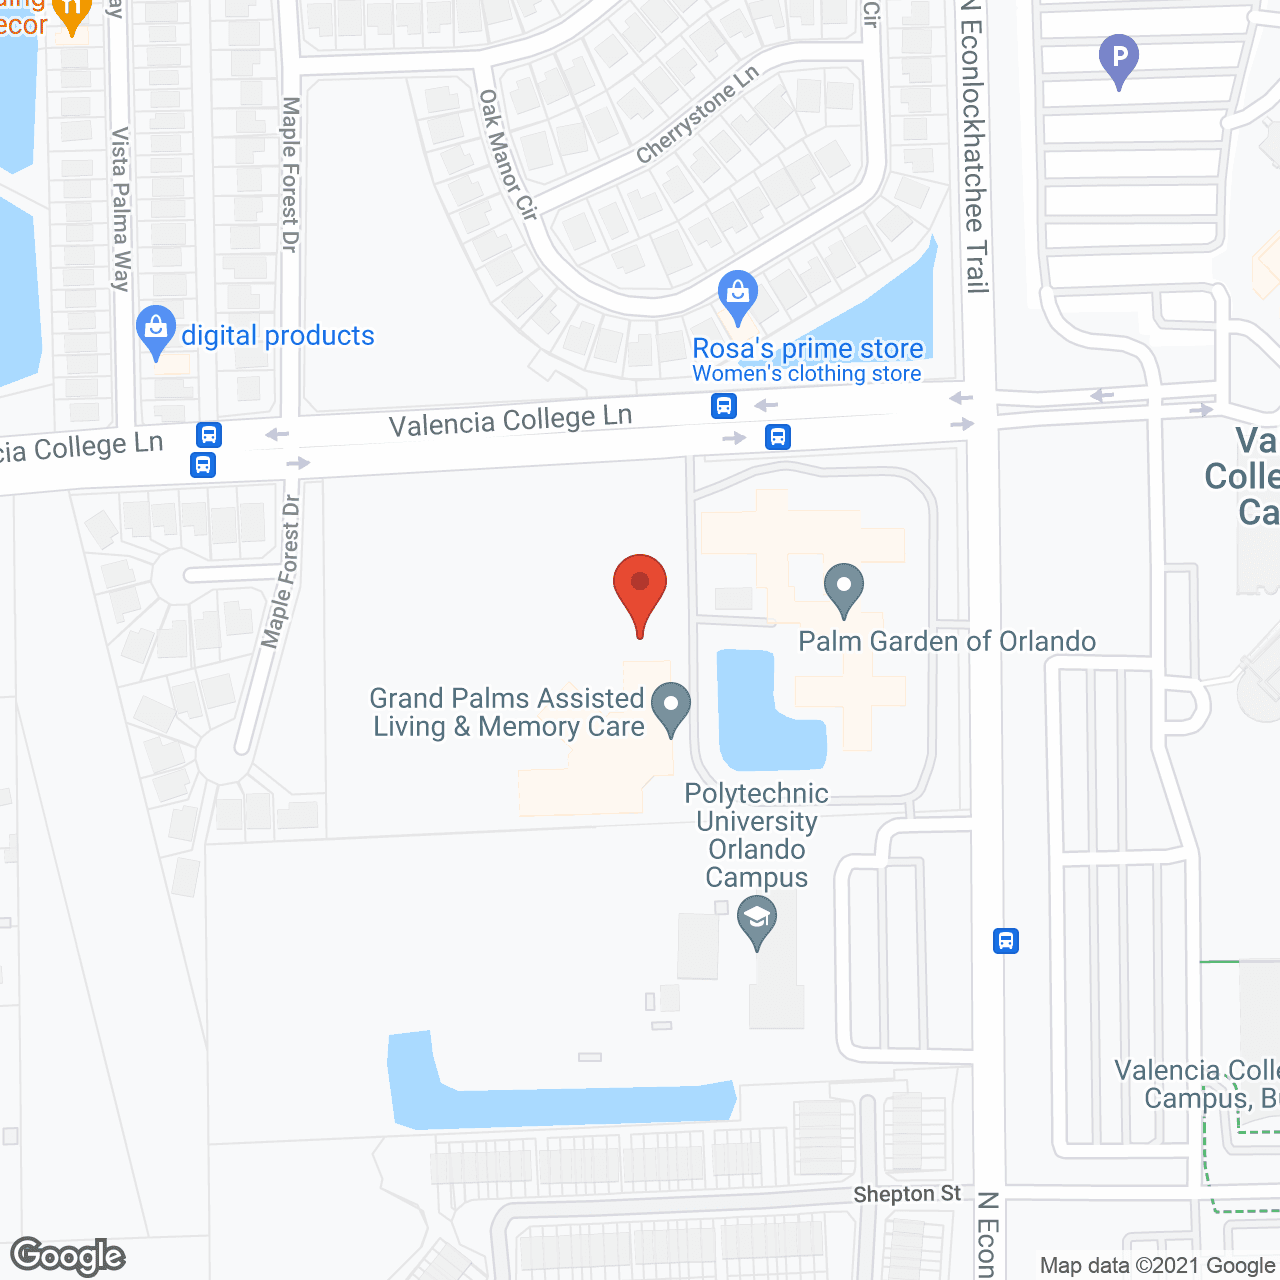 Palm Garden of Orlando in google map